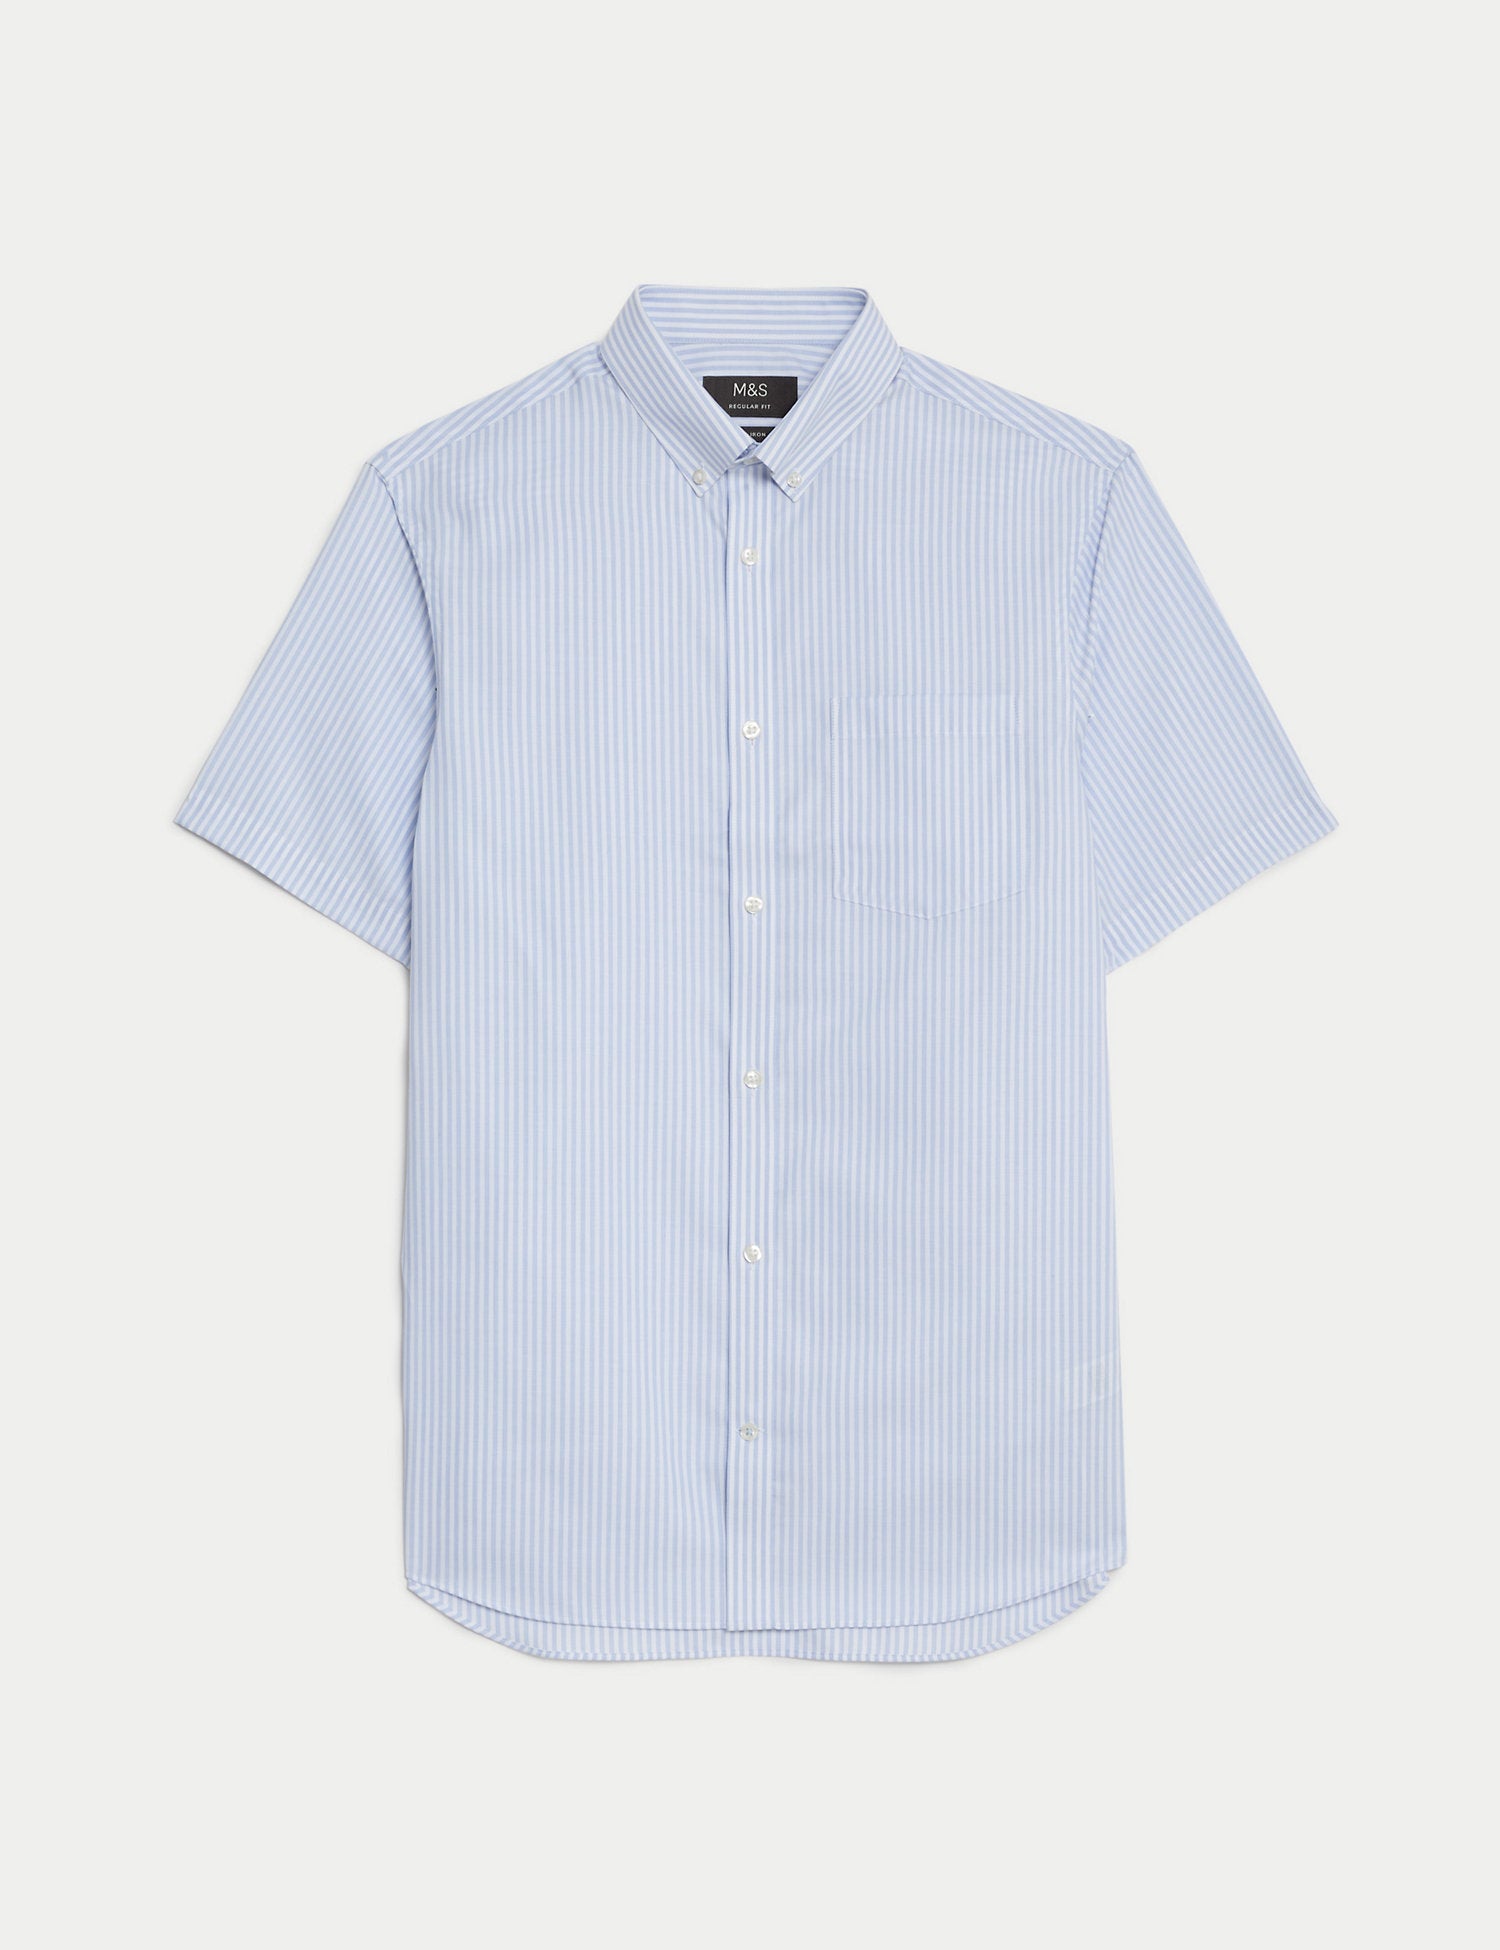 Regular Fit Non Iron Pure Cotton Striped Shirt